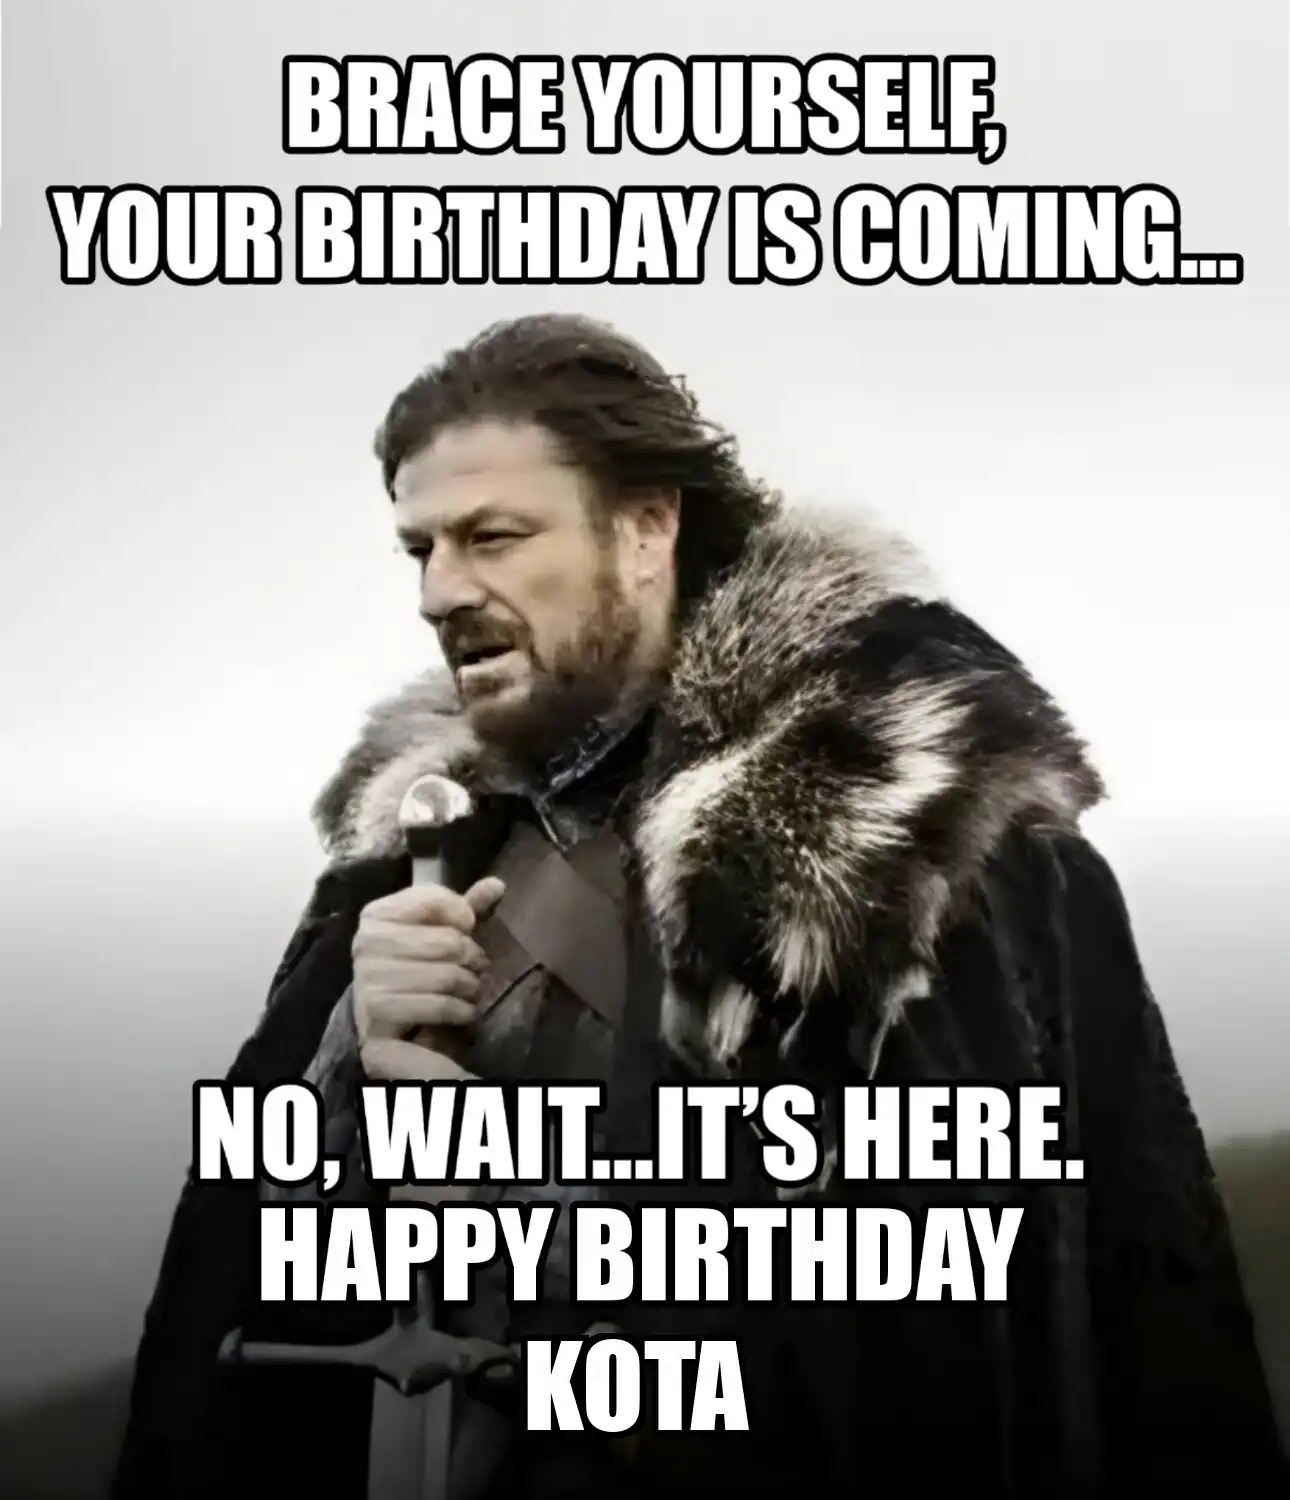 Happy Birthday Kota Brace Yourself Your Birthday Is Coming Meme